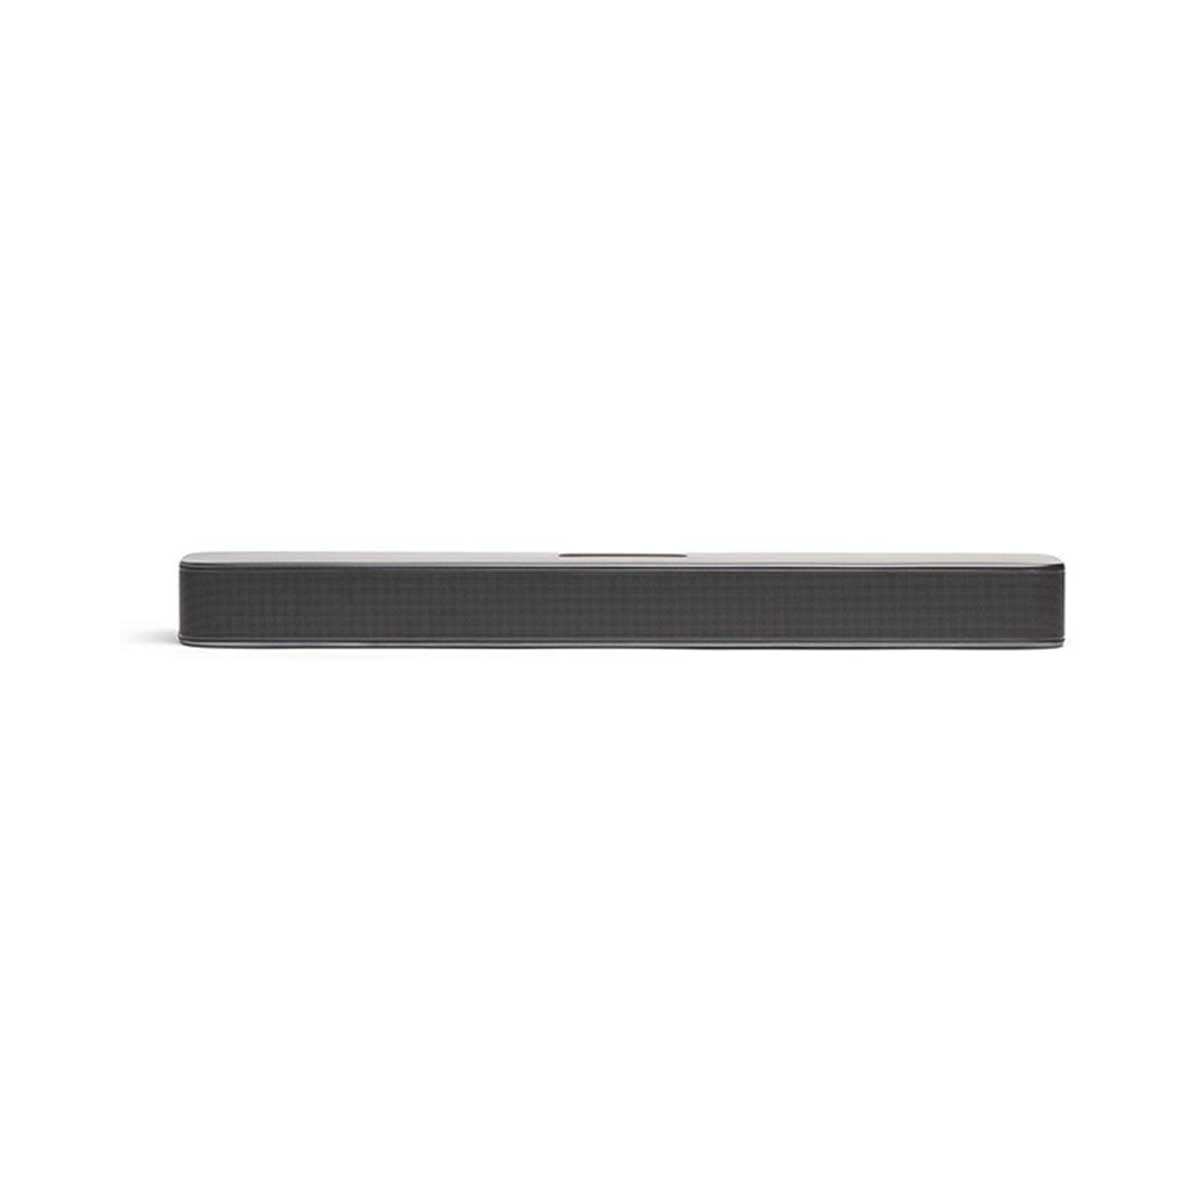 JBL - Bar 2.0 Plus - Compact 2.0 Channel Bluetooth Soundbar - Black